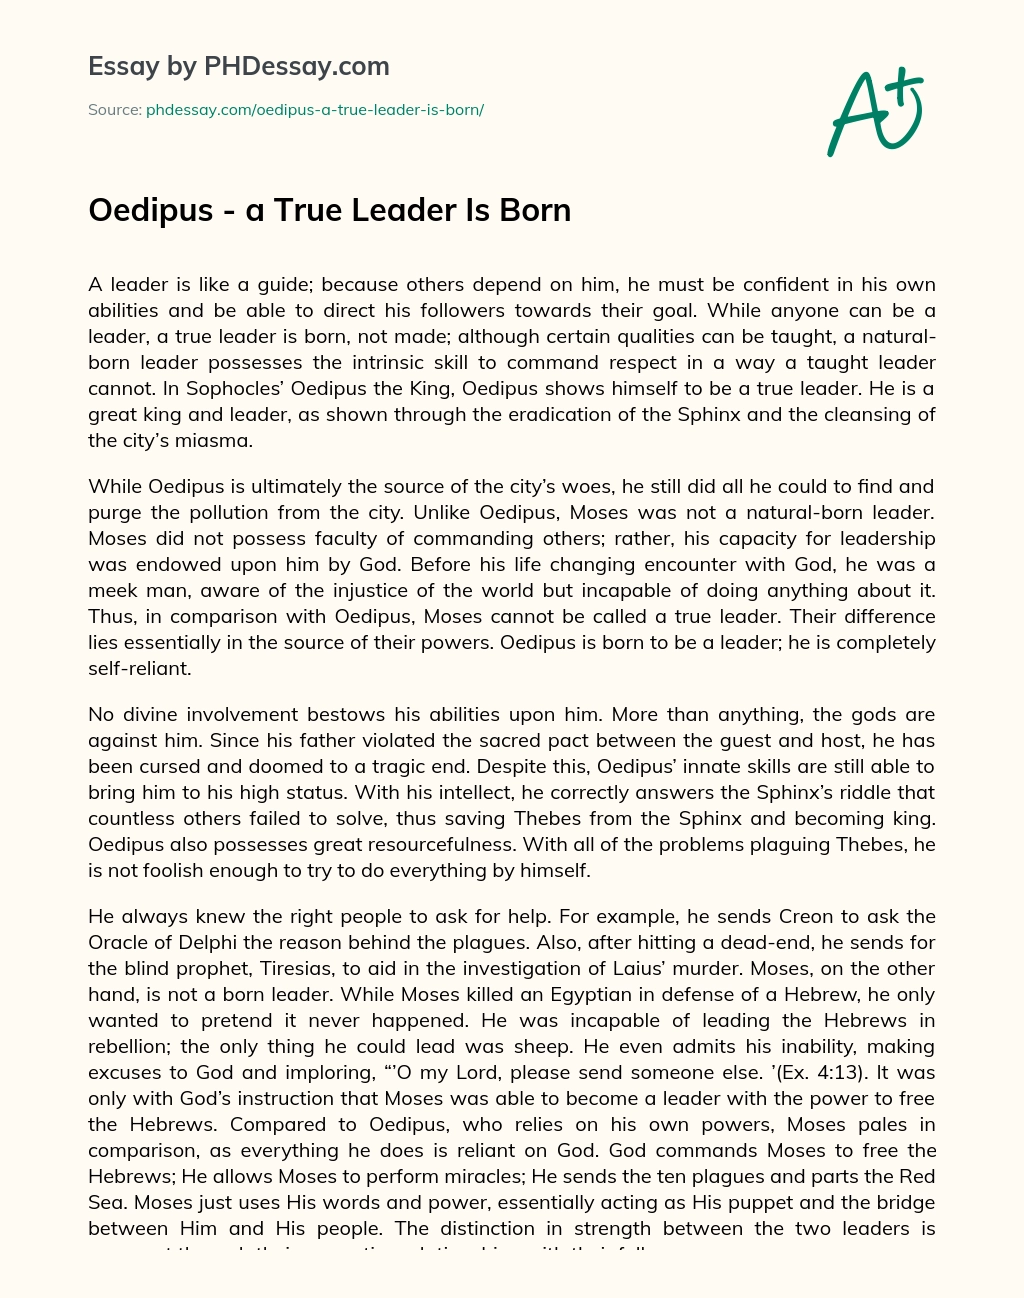 Oedipus – a True Leader Is Born essay